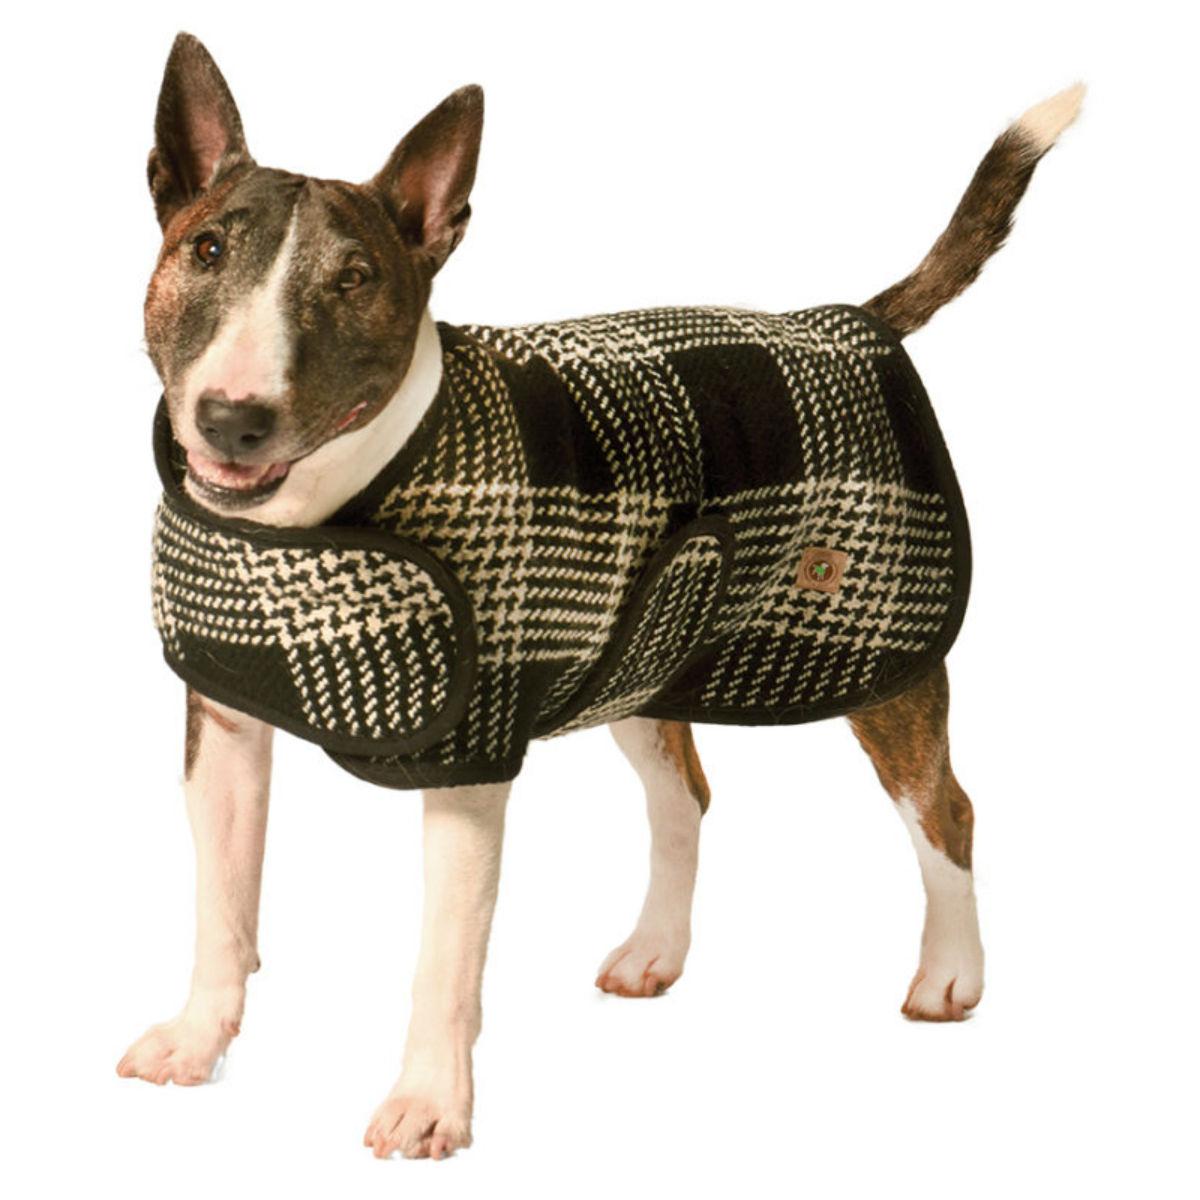 Chilly Dog Plaid Blanket Dog Coat - Black and White